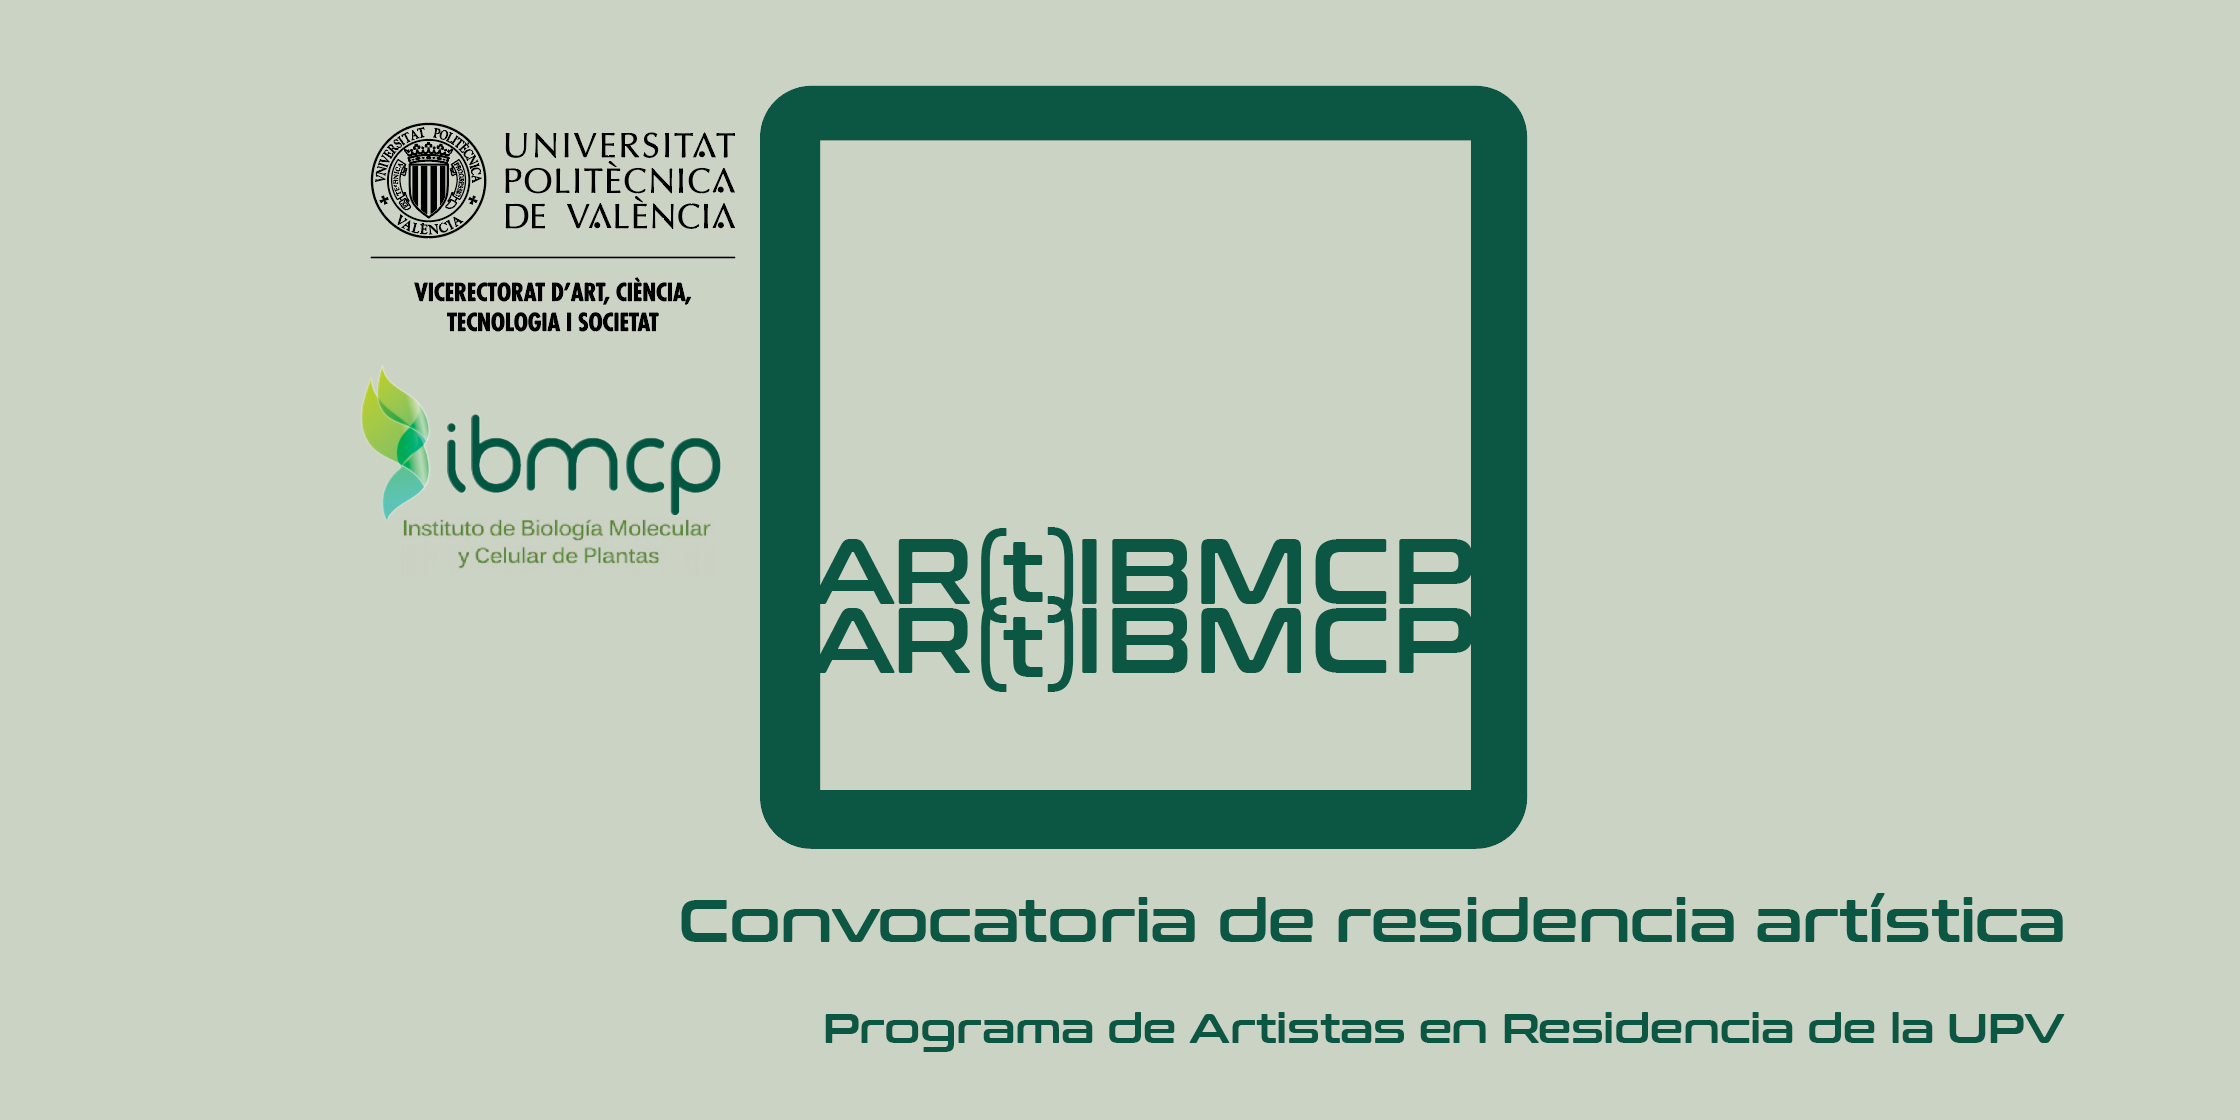 4. AR(t)IBMCP Artist-in-Residence